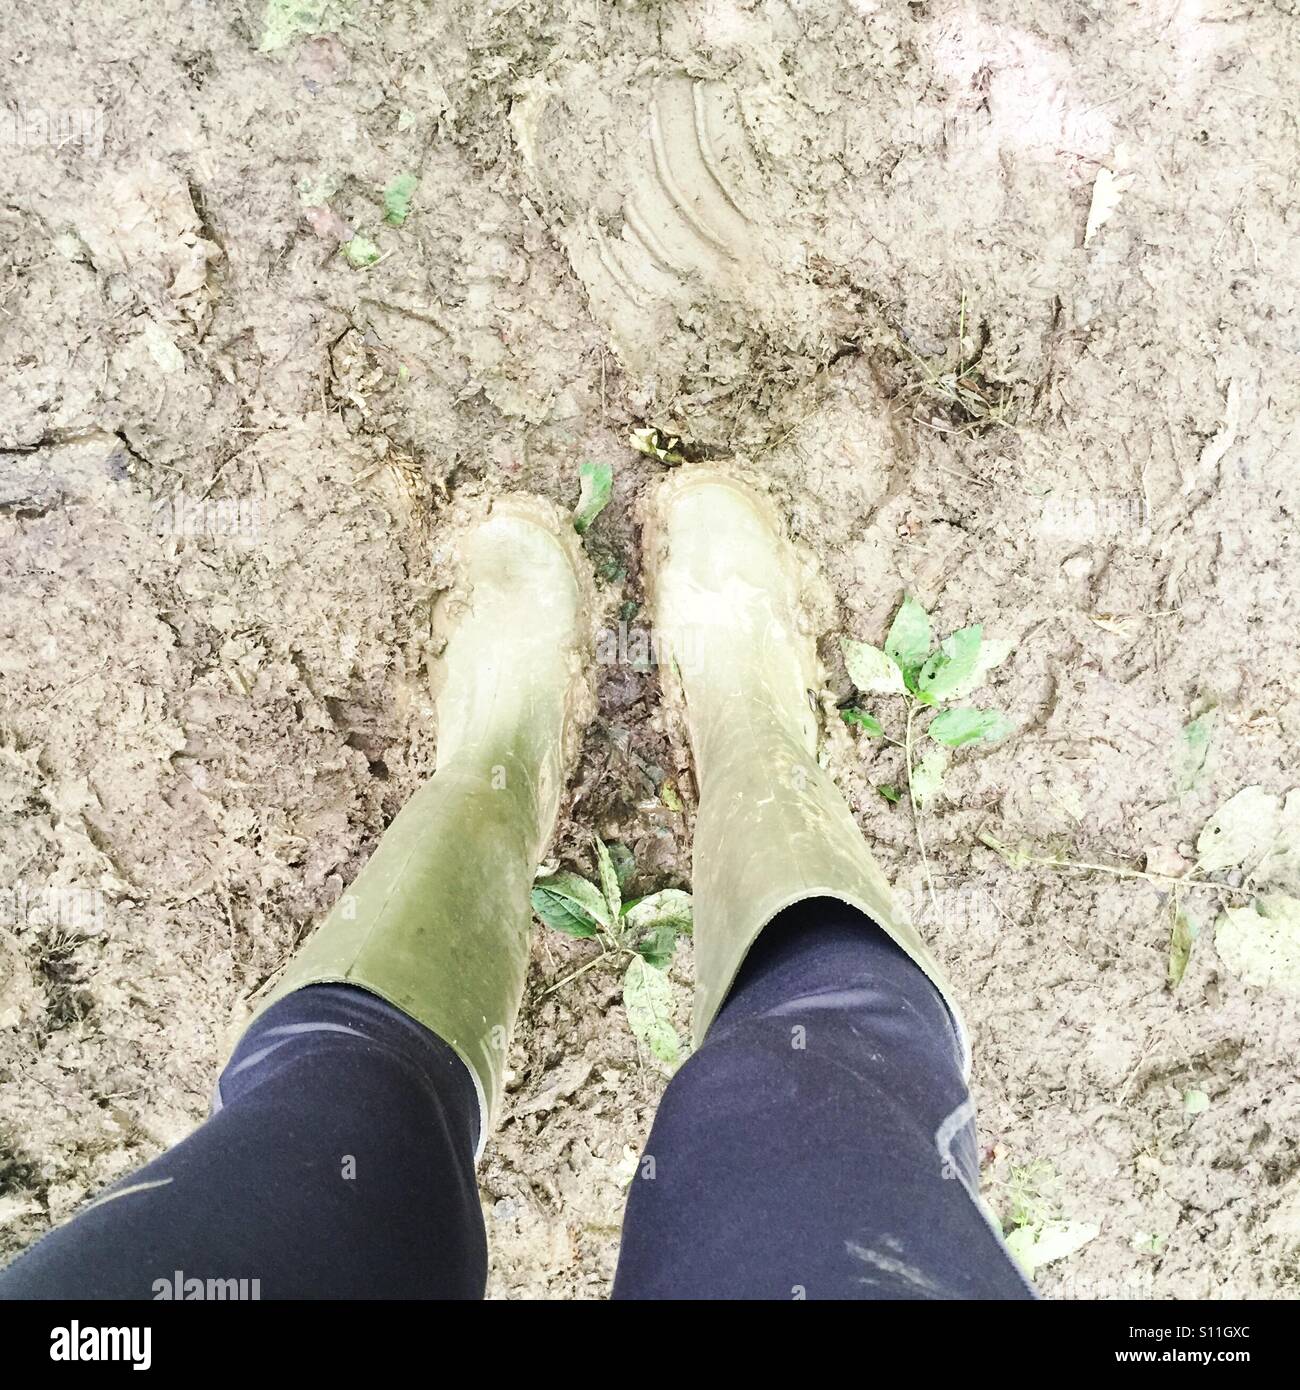 Wellies in mud Stock Photo